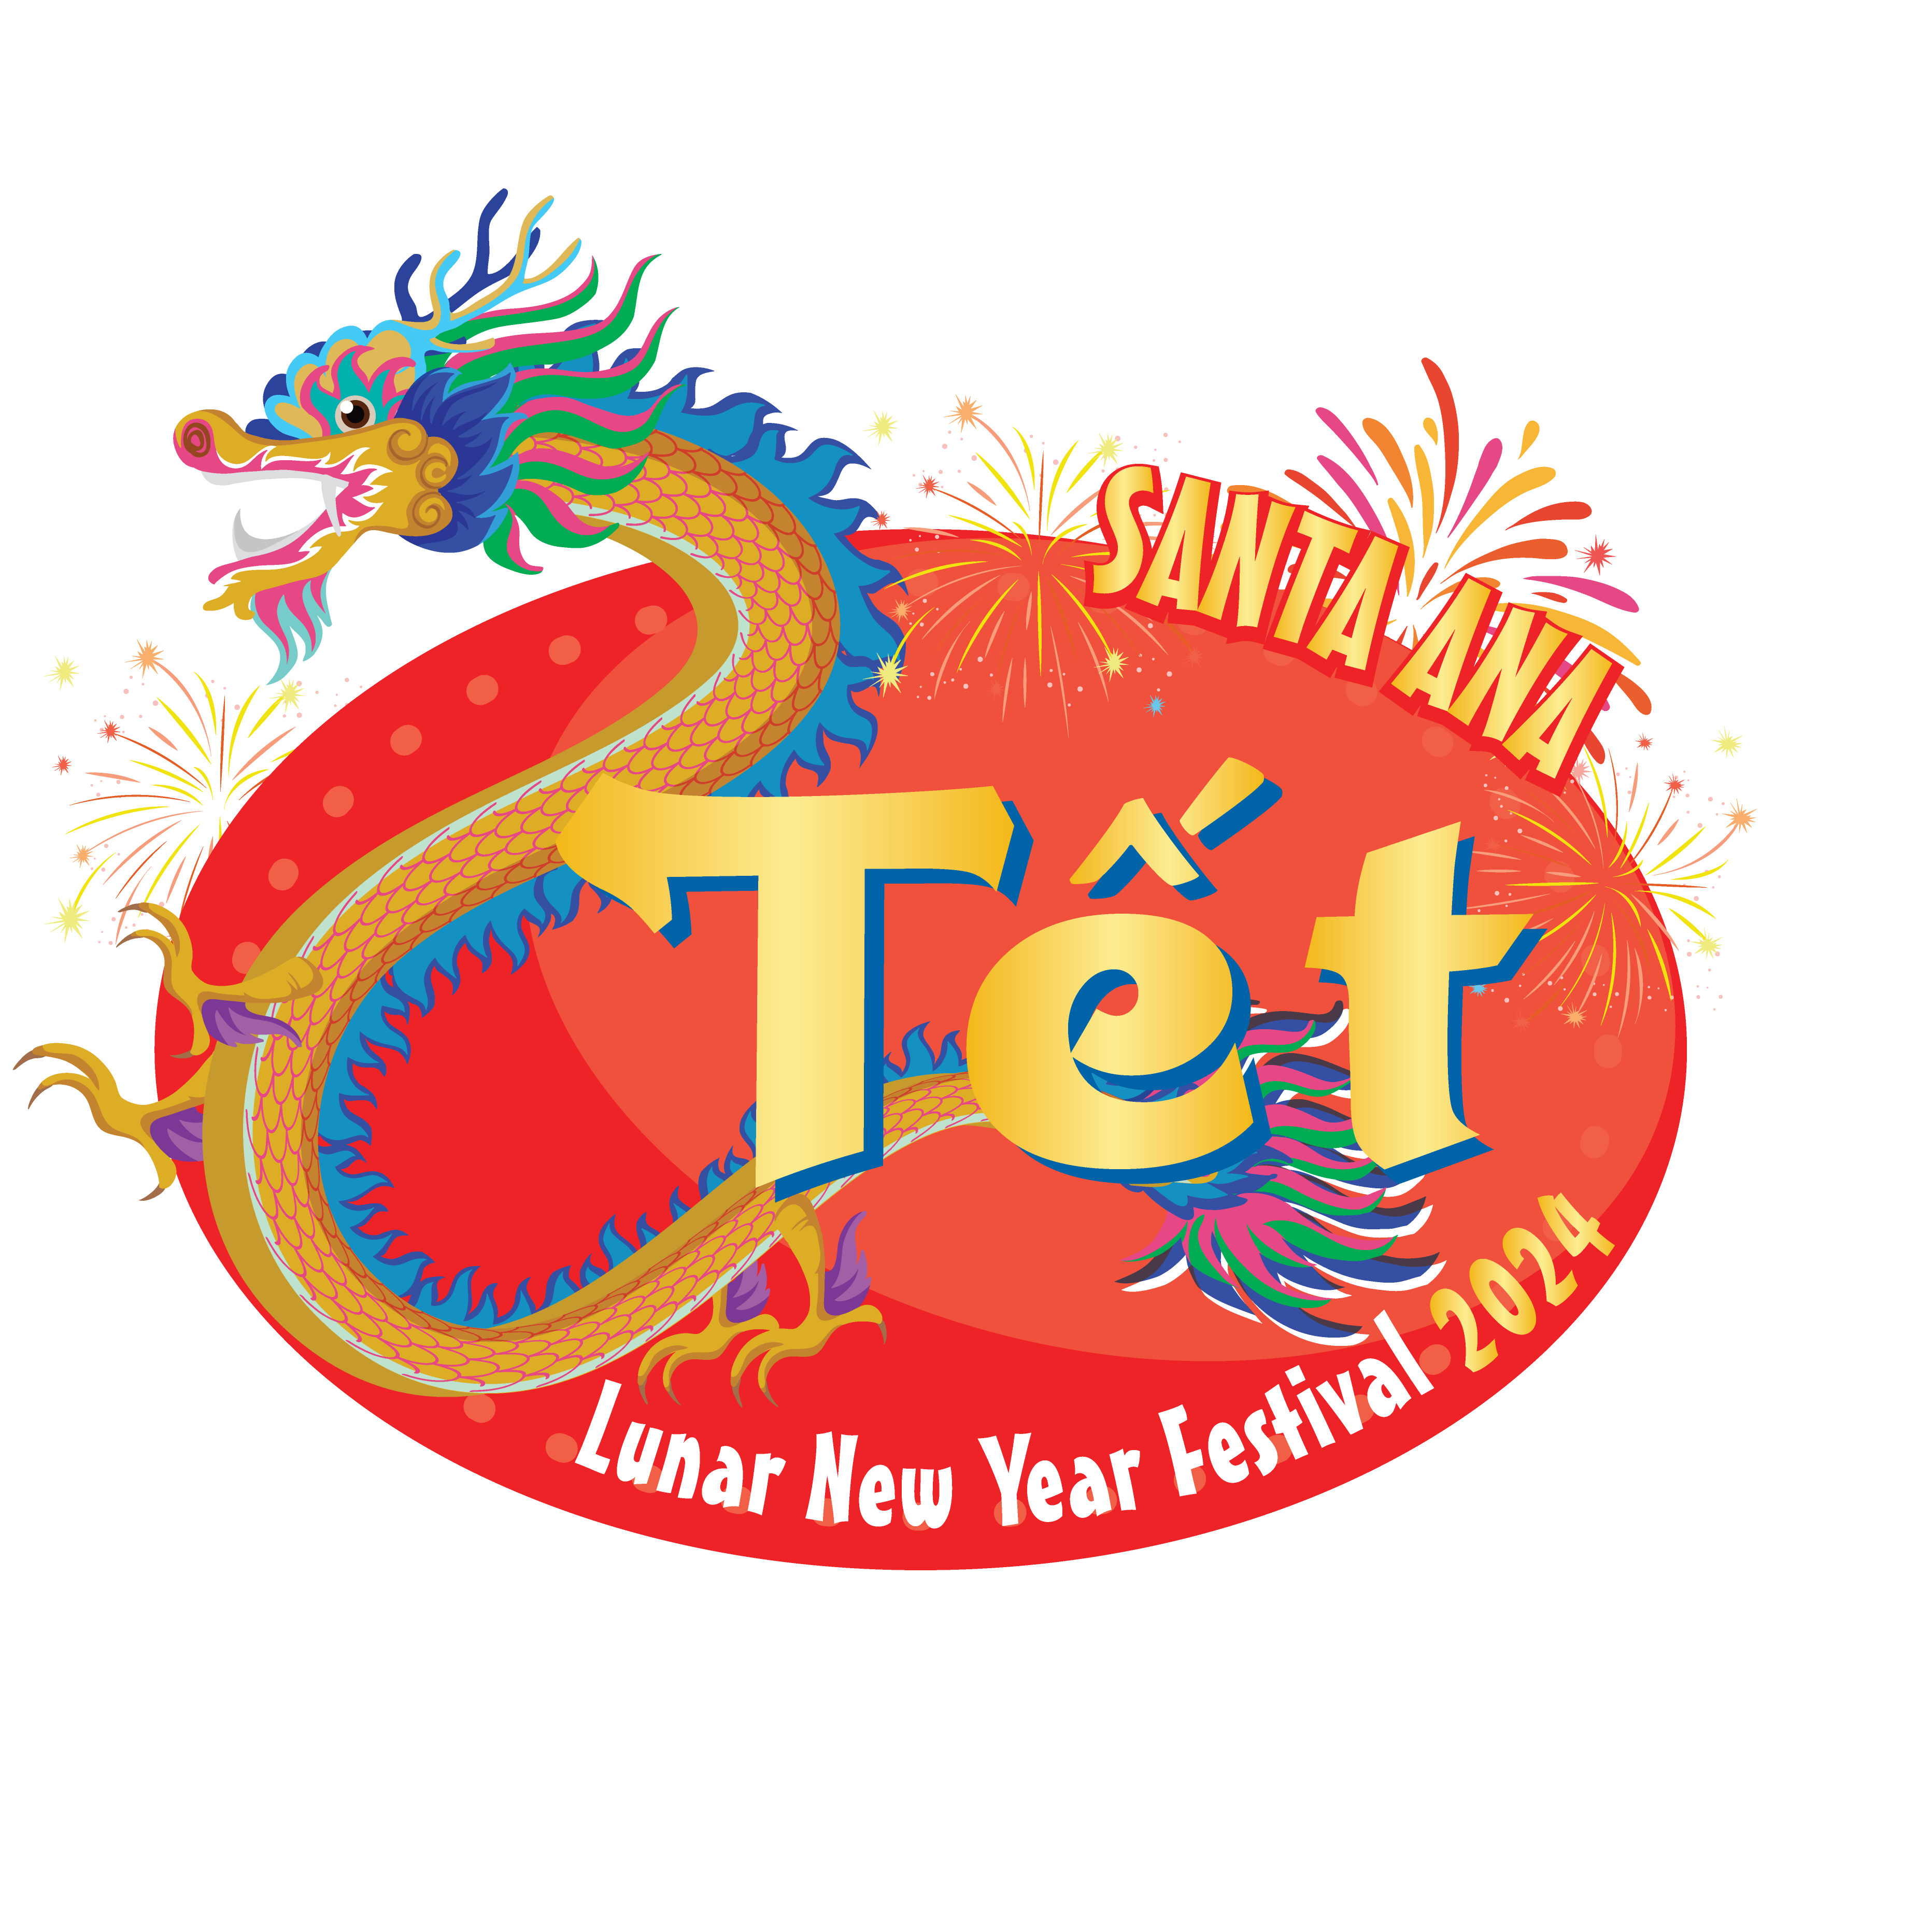 Santa Ana Tet (Lunar New Year) Festival 2024 branded image with dragon